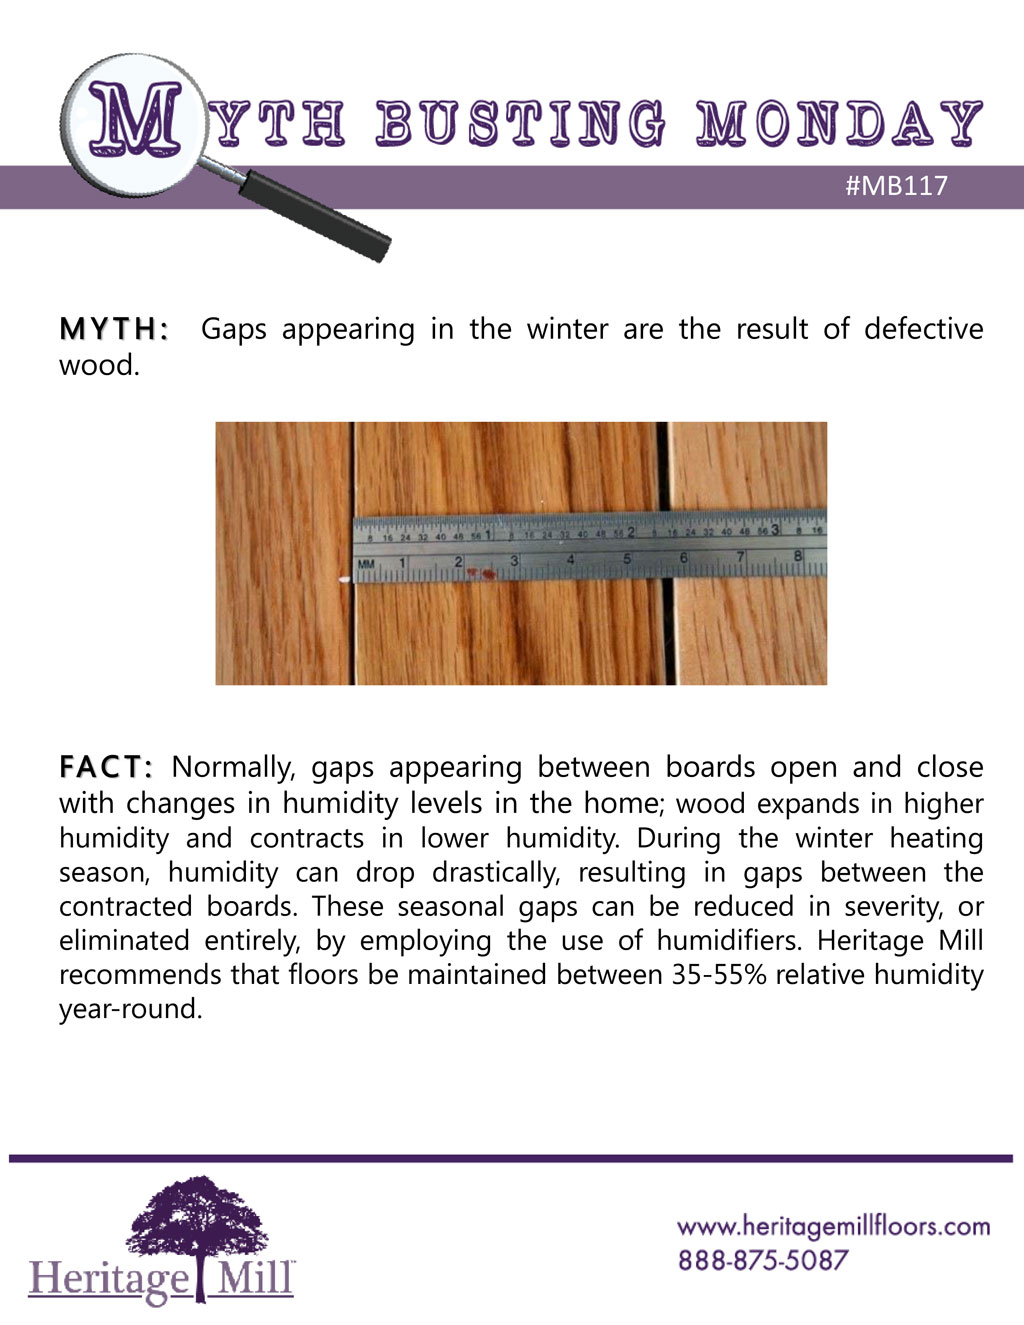 myth winter gaps